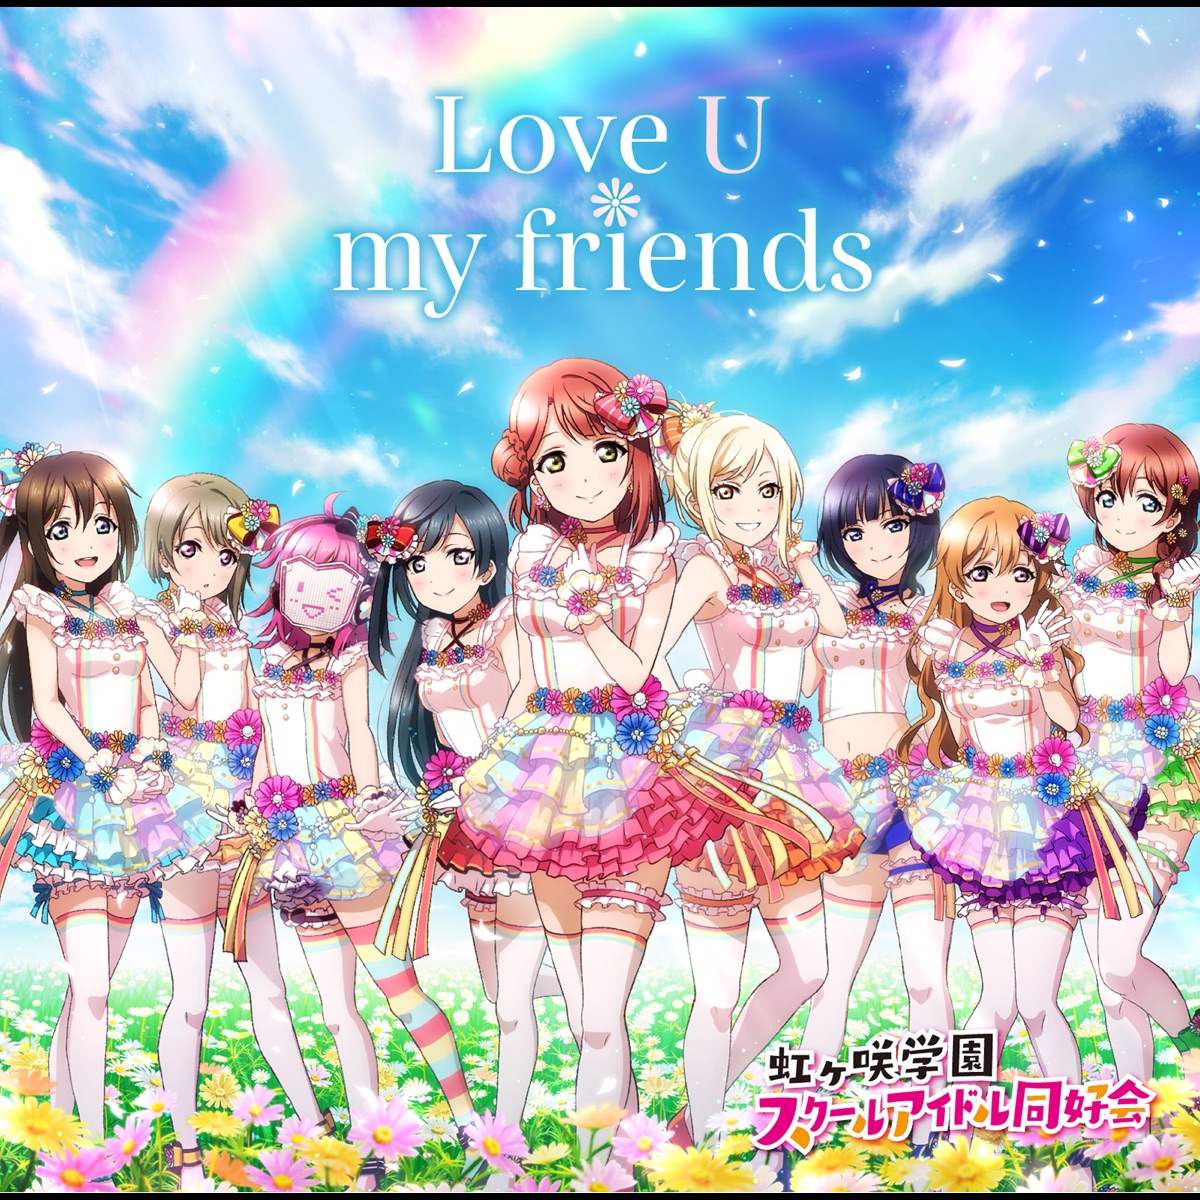 Cover for『Nijigasaki High School Idol Club - Love U my friends』from the release『Love U my friends』